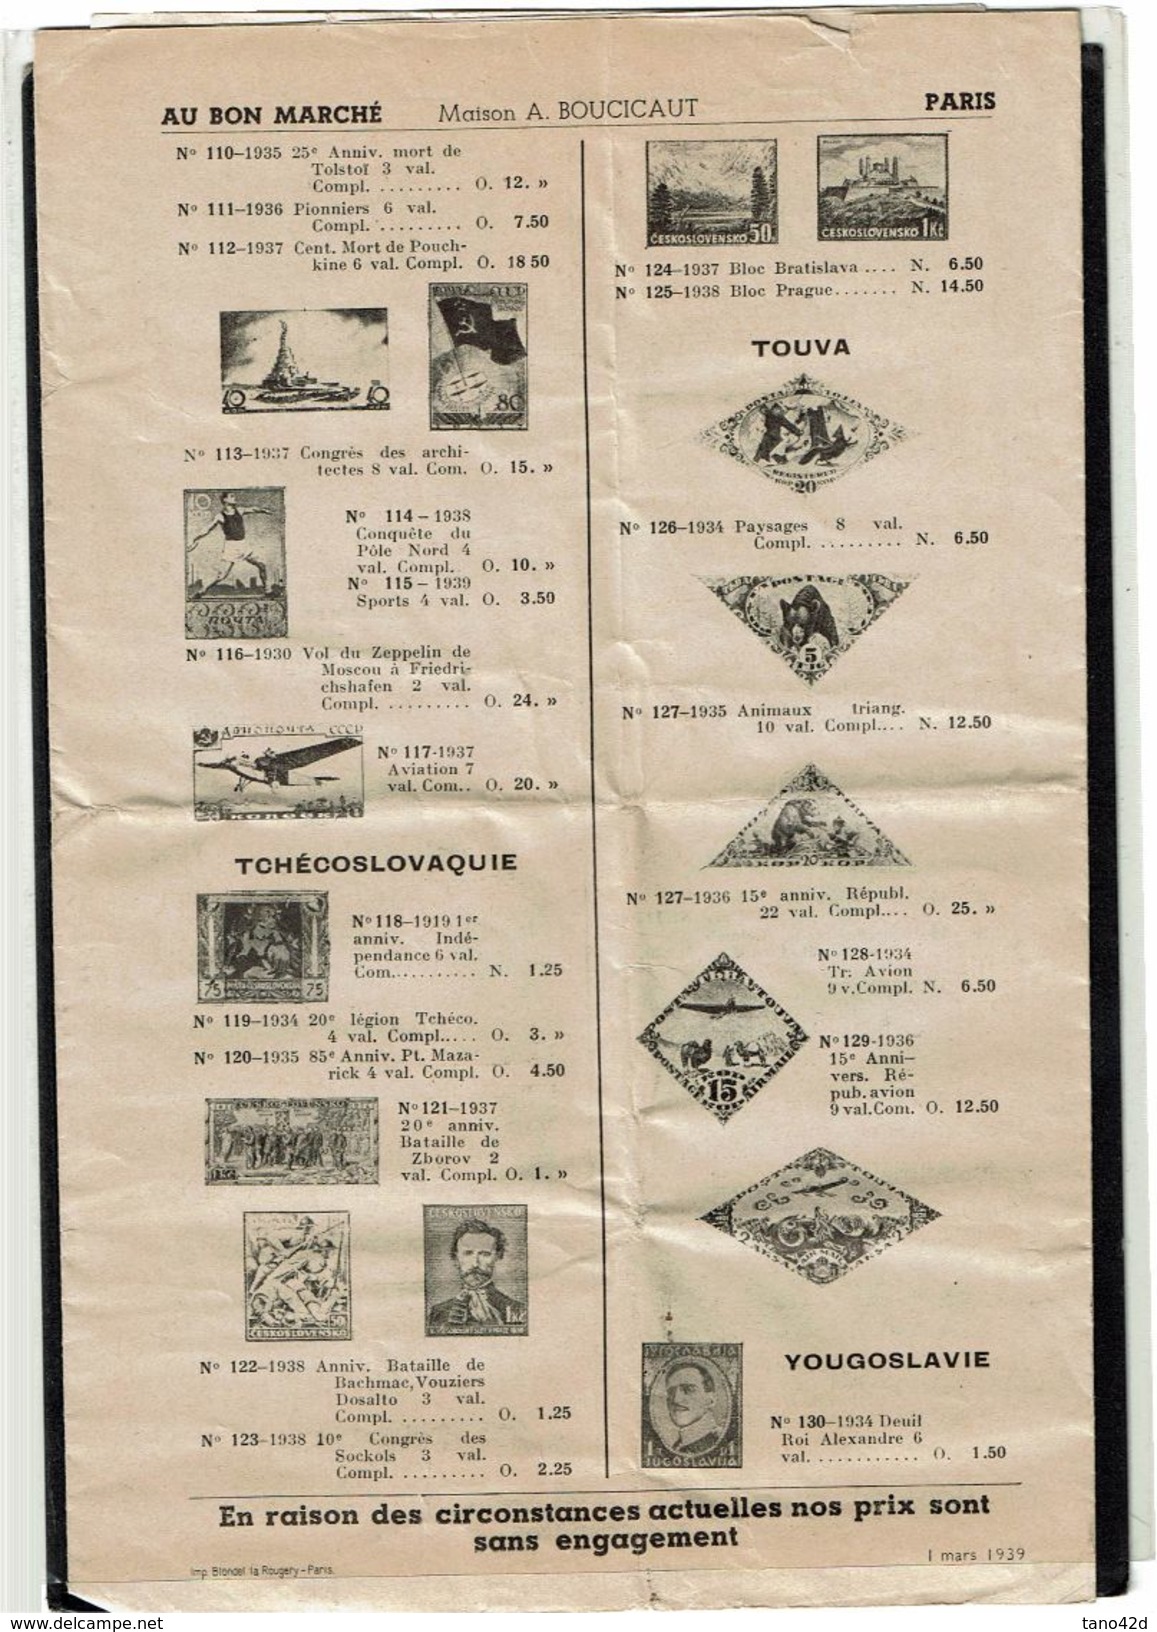 BR39 - AU BON MARCHE RAYON PHILATELIE MARS 1939 ENCART 3 VOLETS  6 FACADES - Catálogos De Casas De Ventas